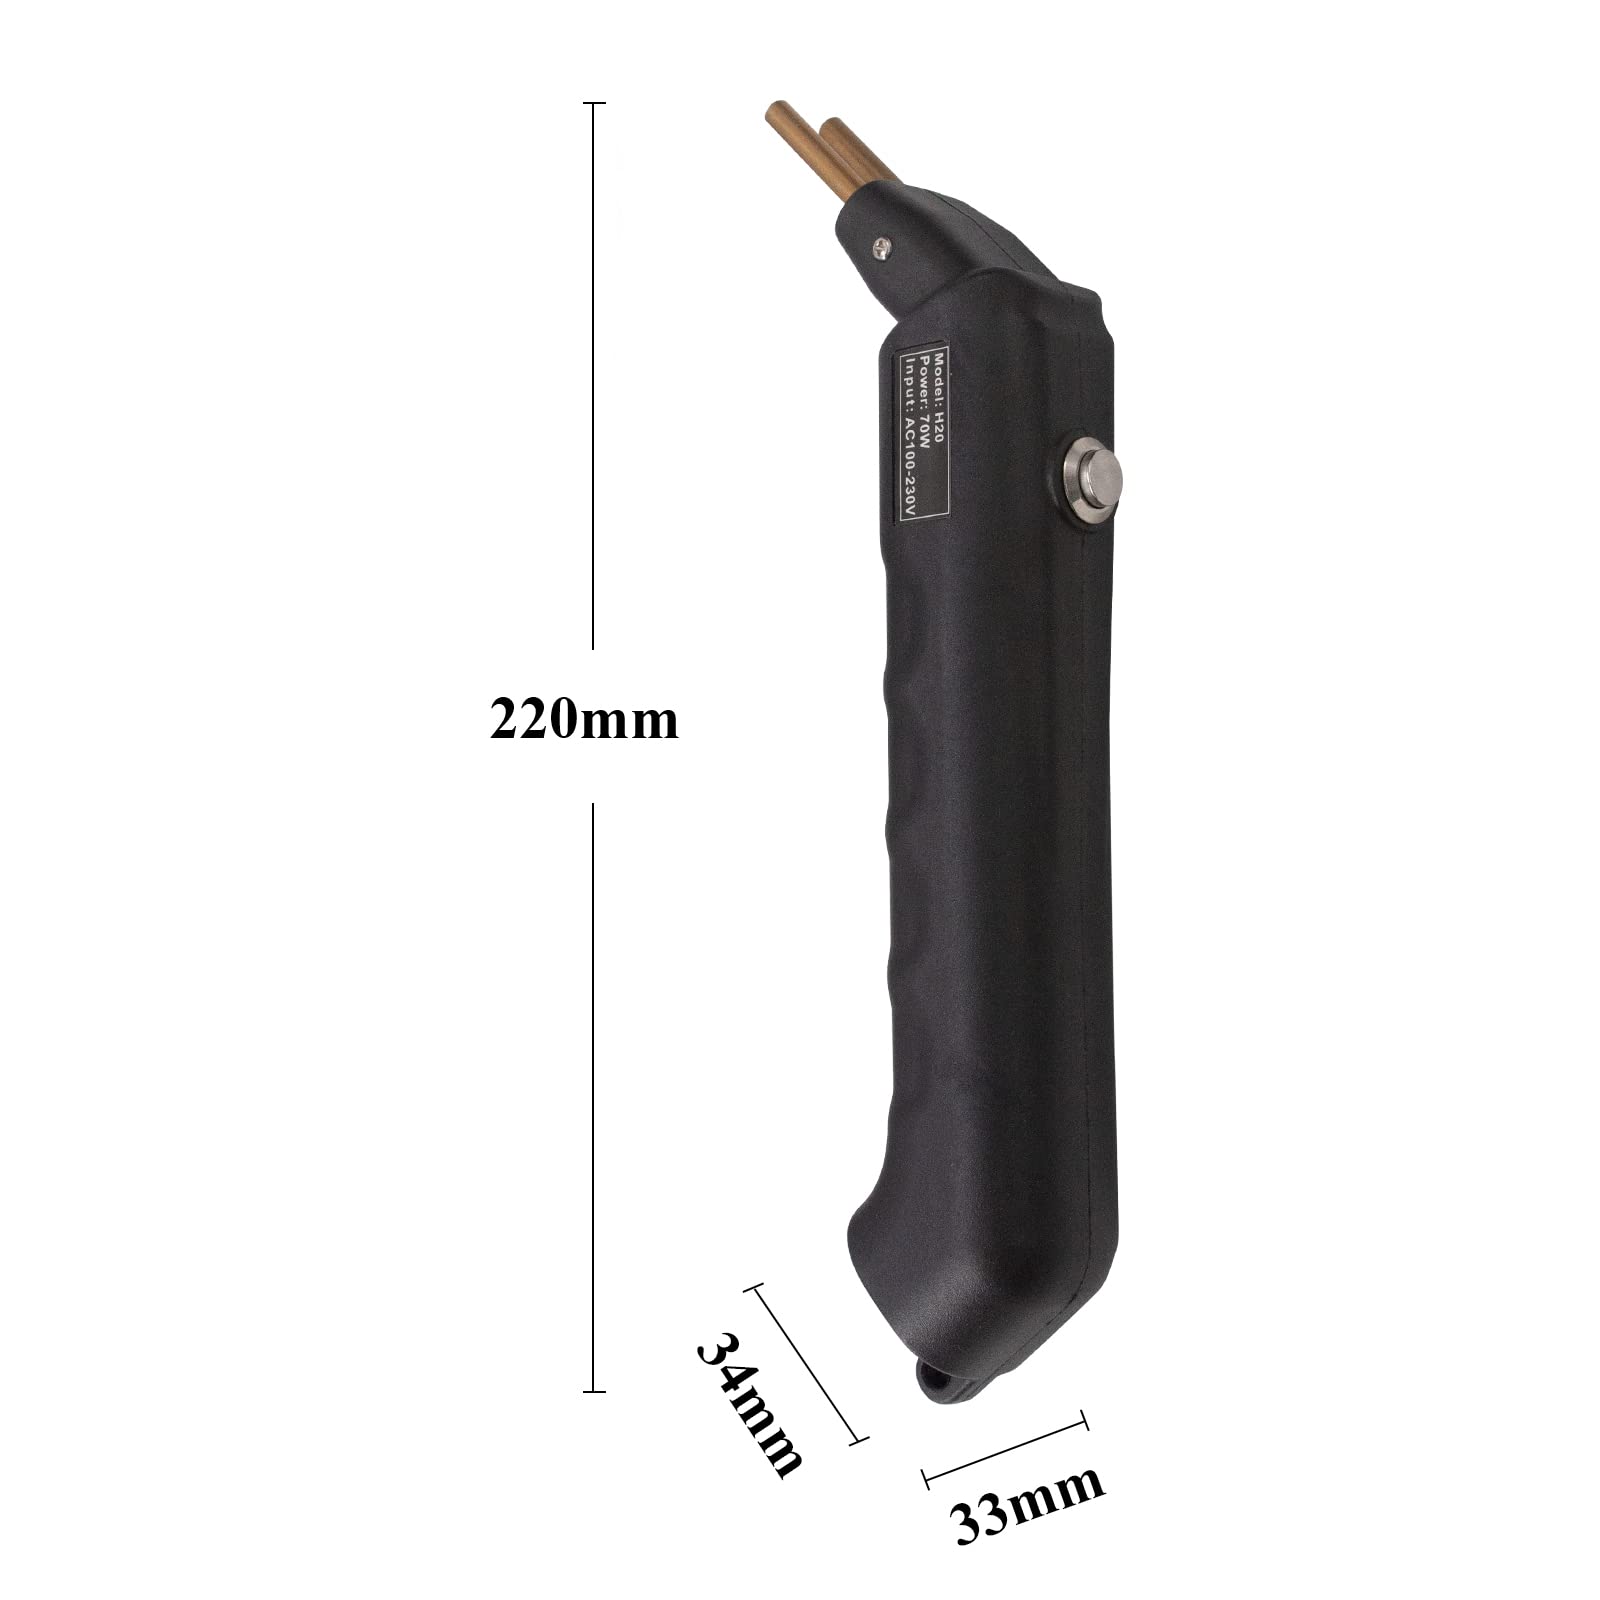 Pakowin Plastic Welder Machine, 70W Handheld Hot Stapler Welding Gun for Car Bumper Repair, with Carry Case and 205 Staples (5 Types)